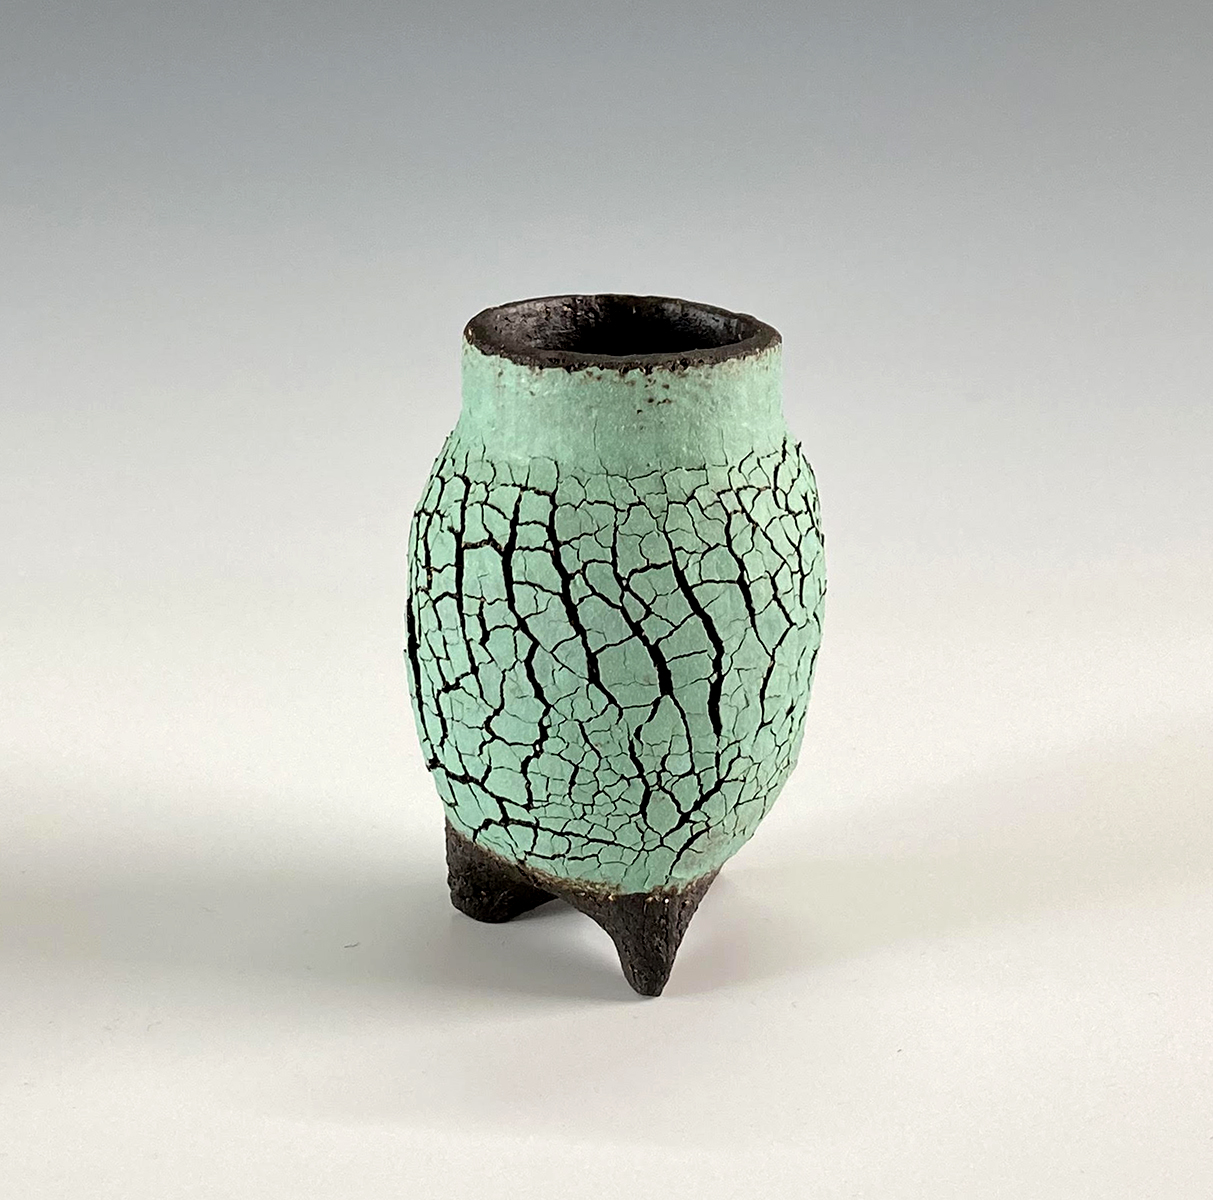 Cracked vessel – green